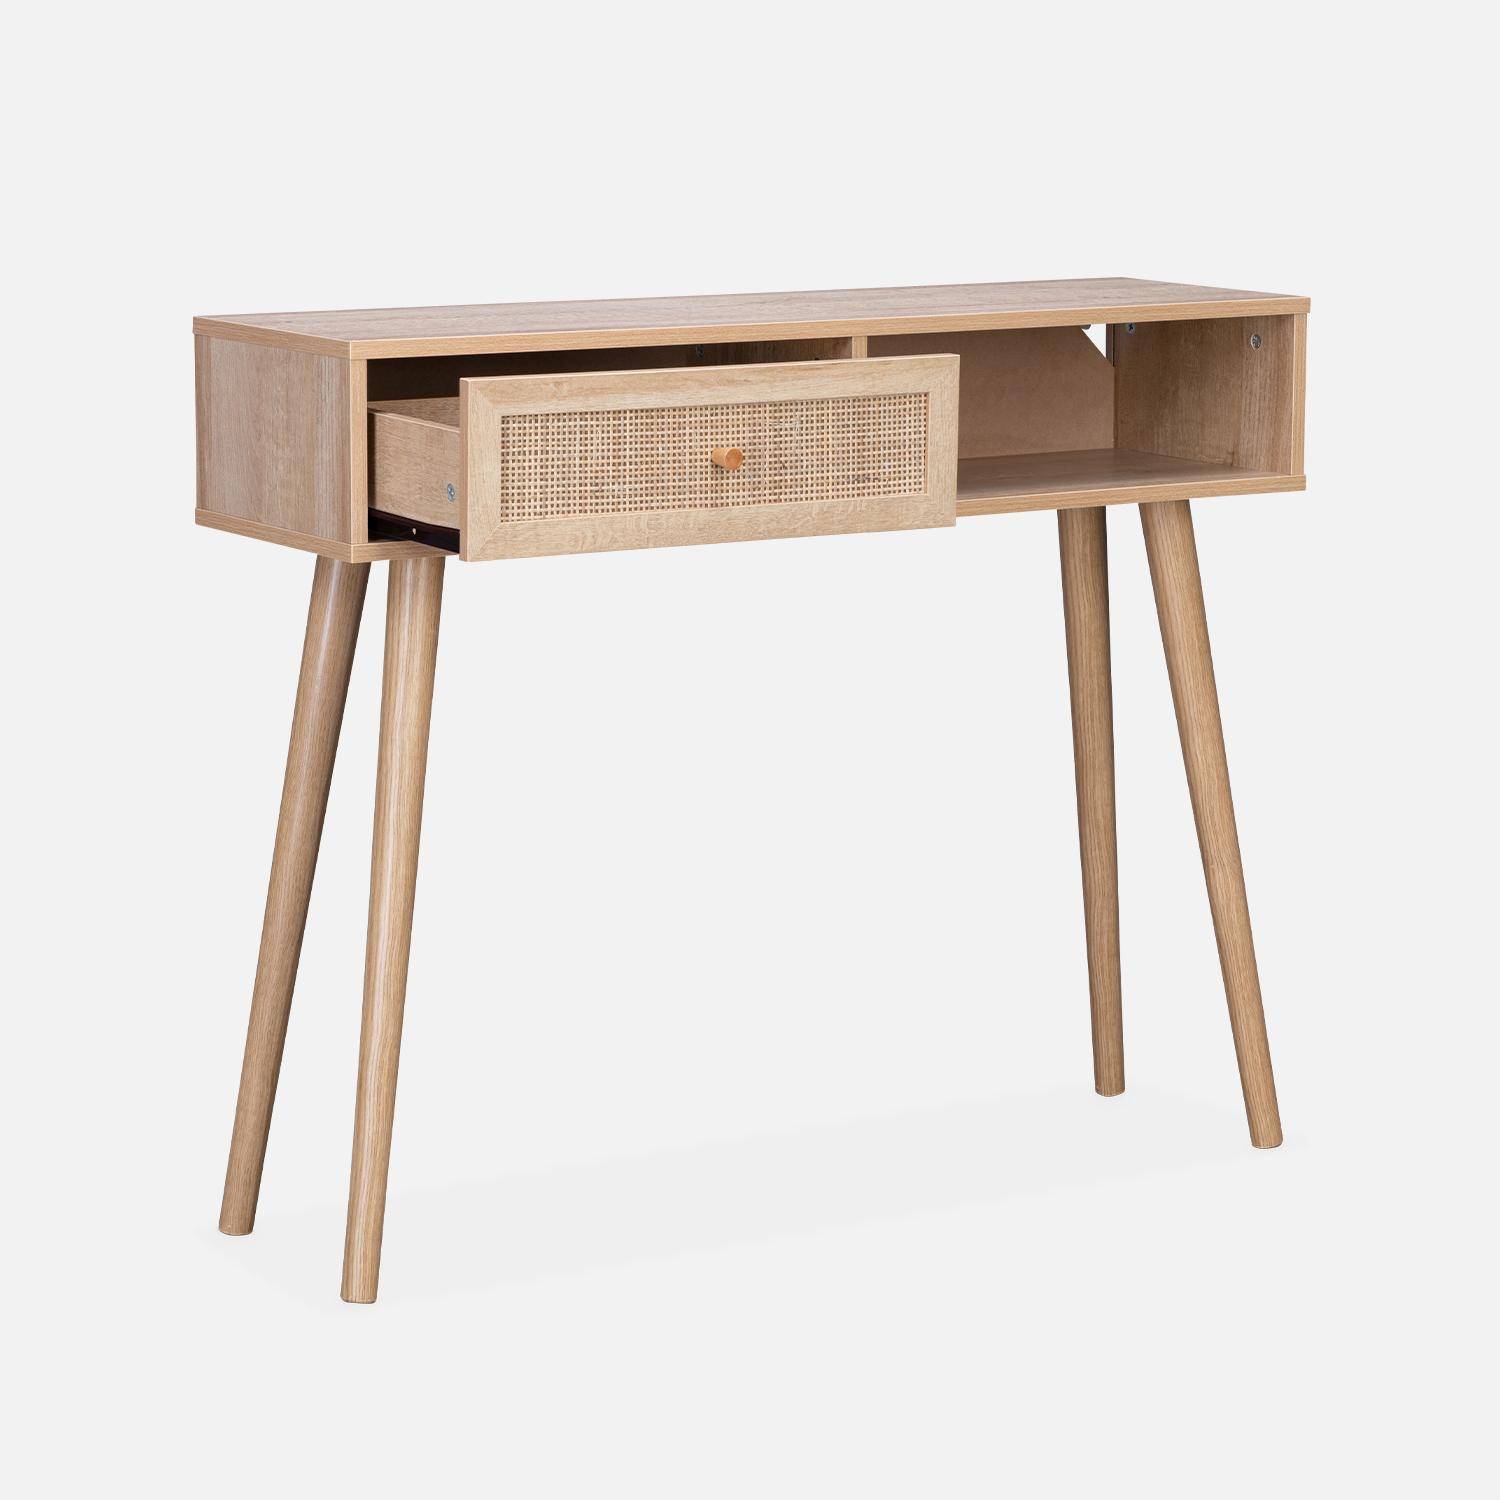 Wood and cane rattan Scandi-style console table, 100x30x81cm - Boheme - Natural wood colour Photo4